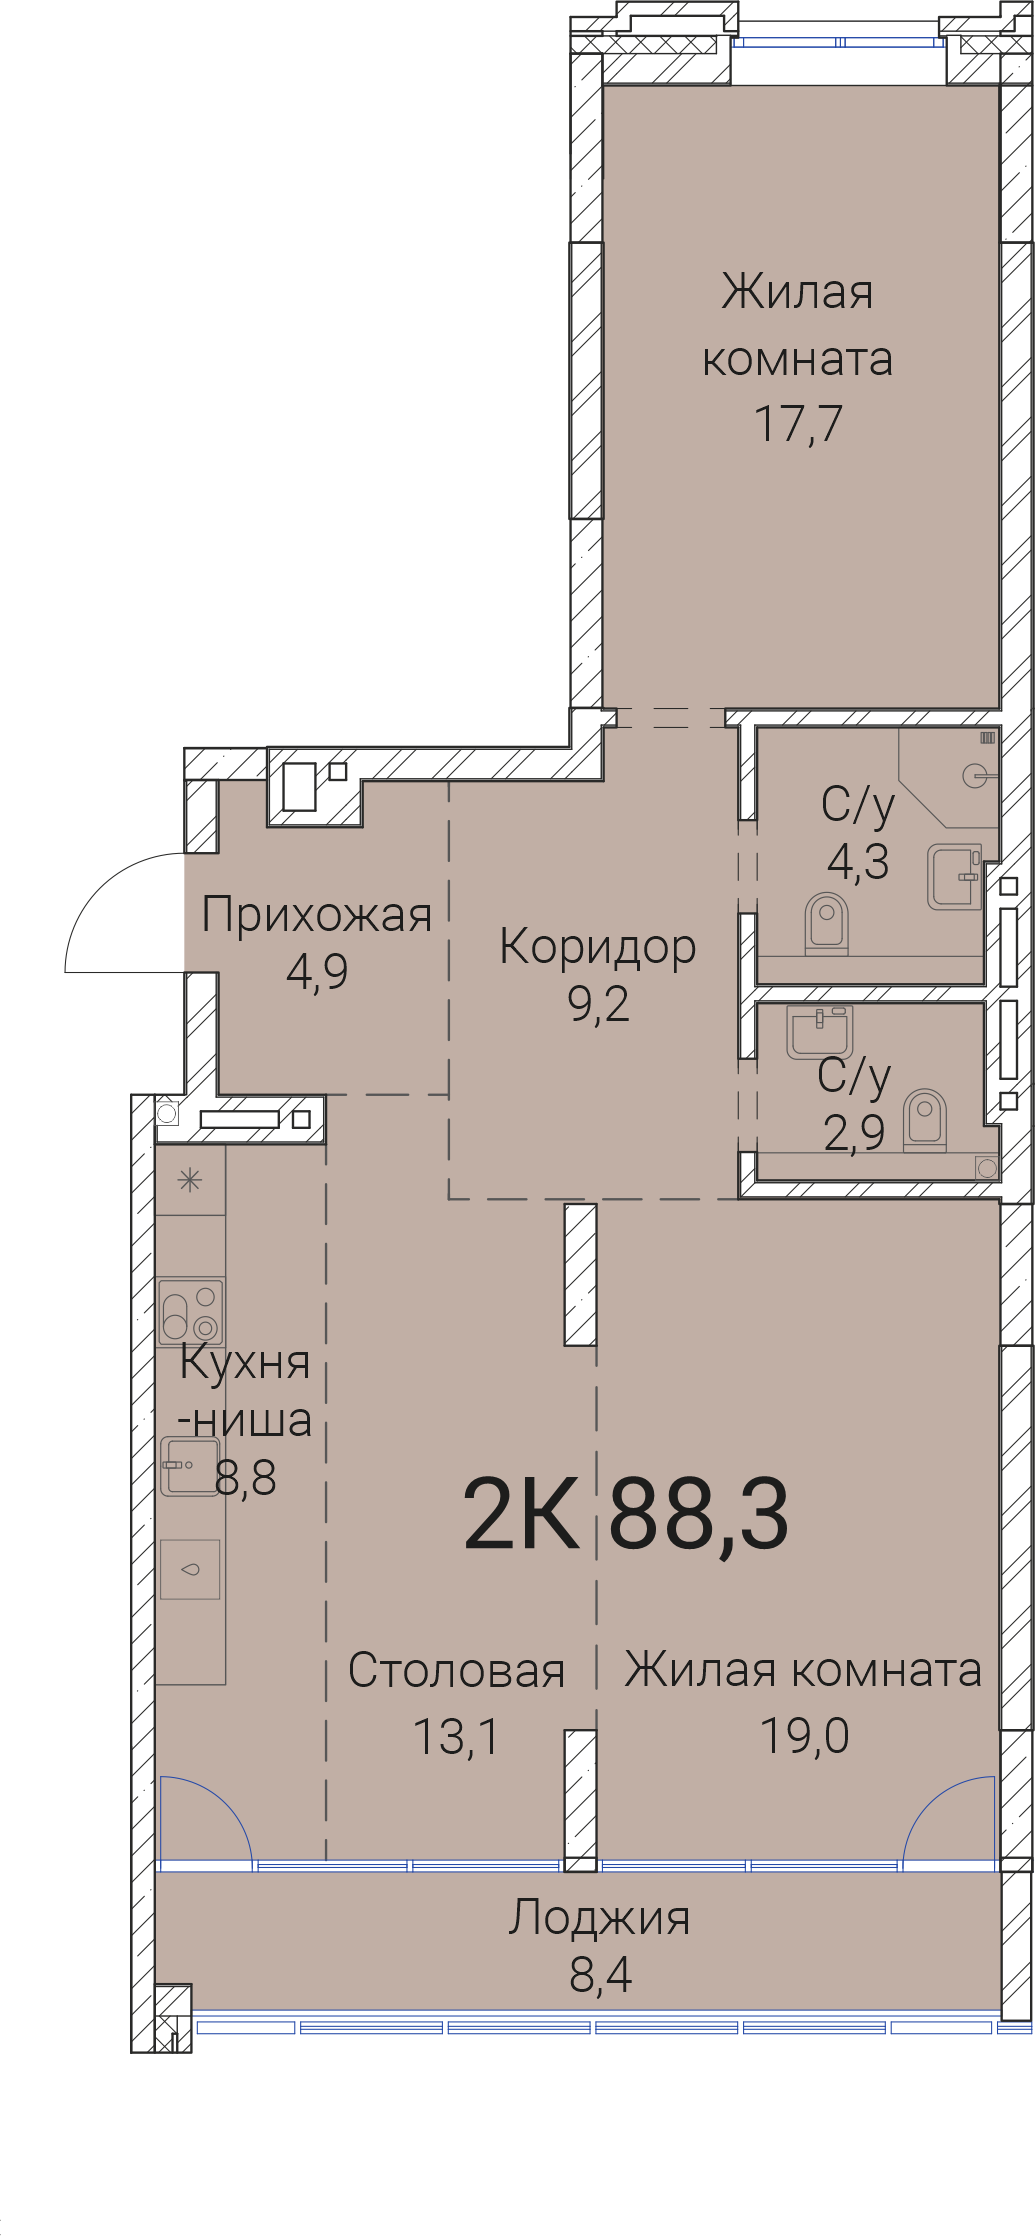 3-комнатная квартира 88.3м2 ЖК Тайм Сквер